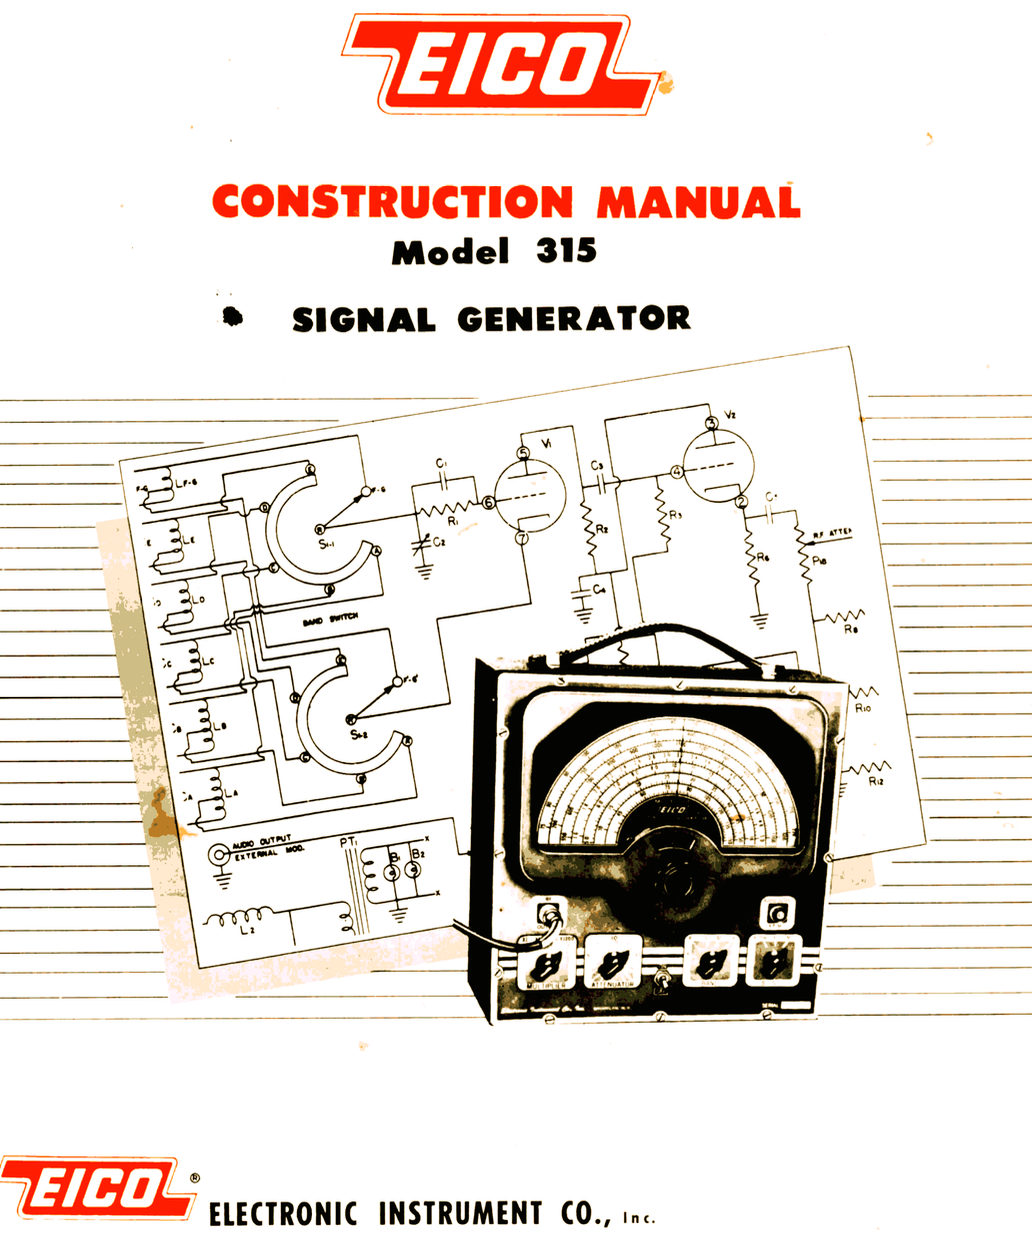 EICO 315 - Construction Manual